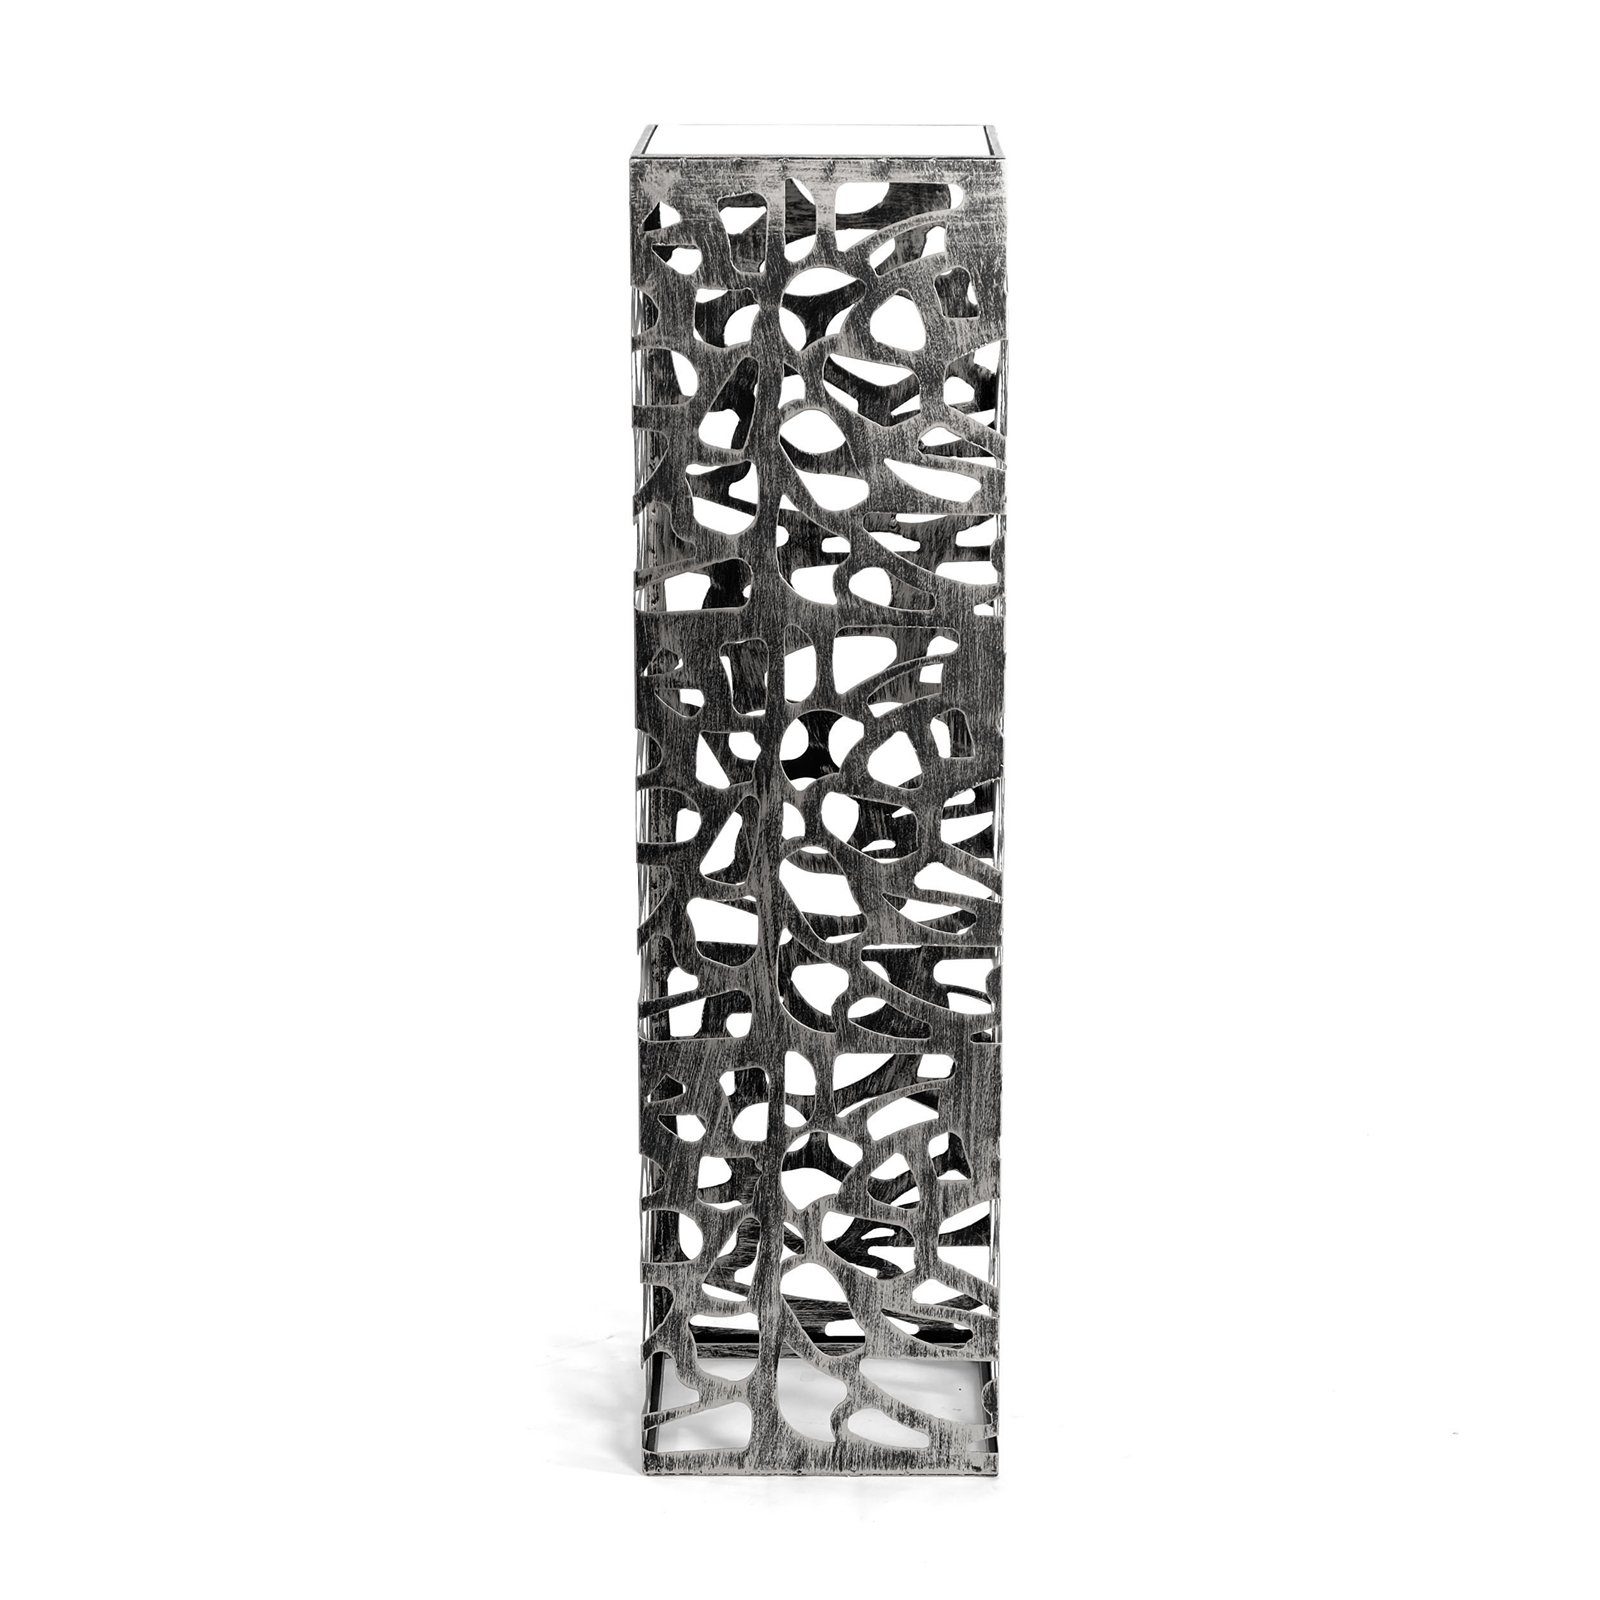 Dekosäule cm, "ENZA 100 DEKO antik-silber, GRANDE", DESIGN DELIGHTS Metall SÄULE Dekofigur aus